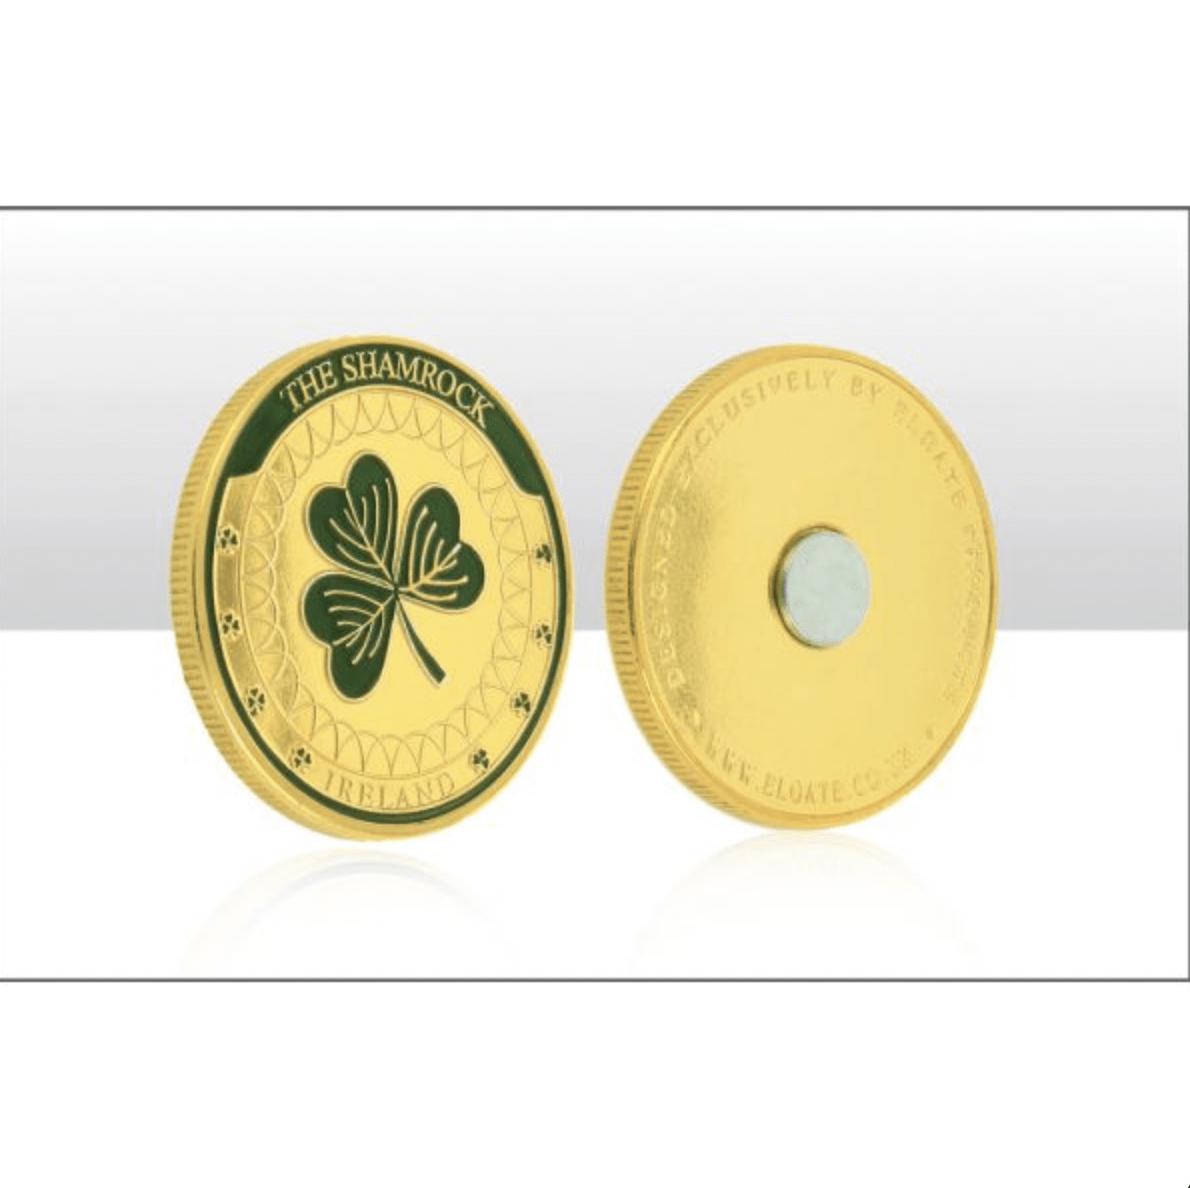 Irish Shamrock & Blessing 40mm Gold Coin Magnet - Zhivago Gifts